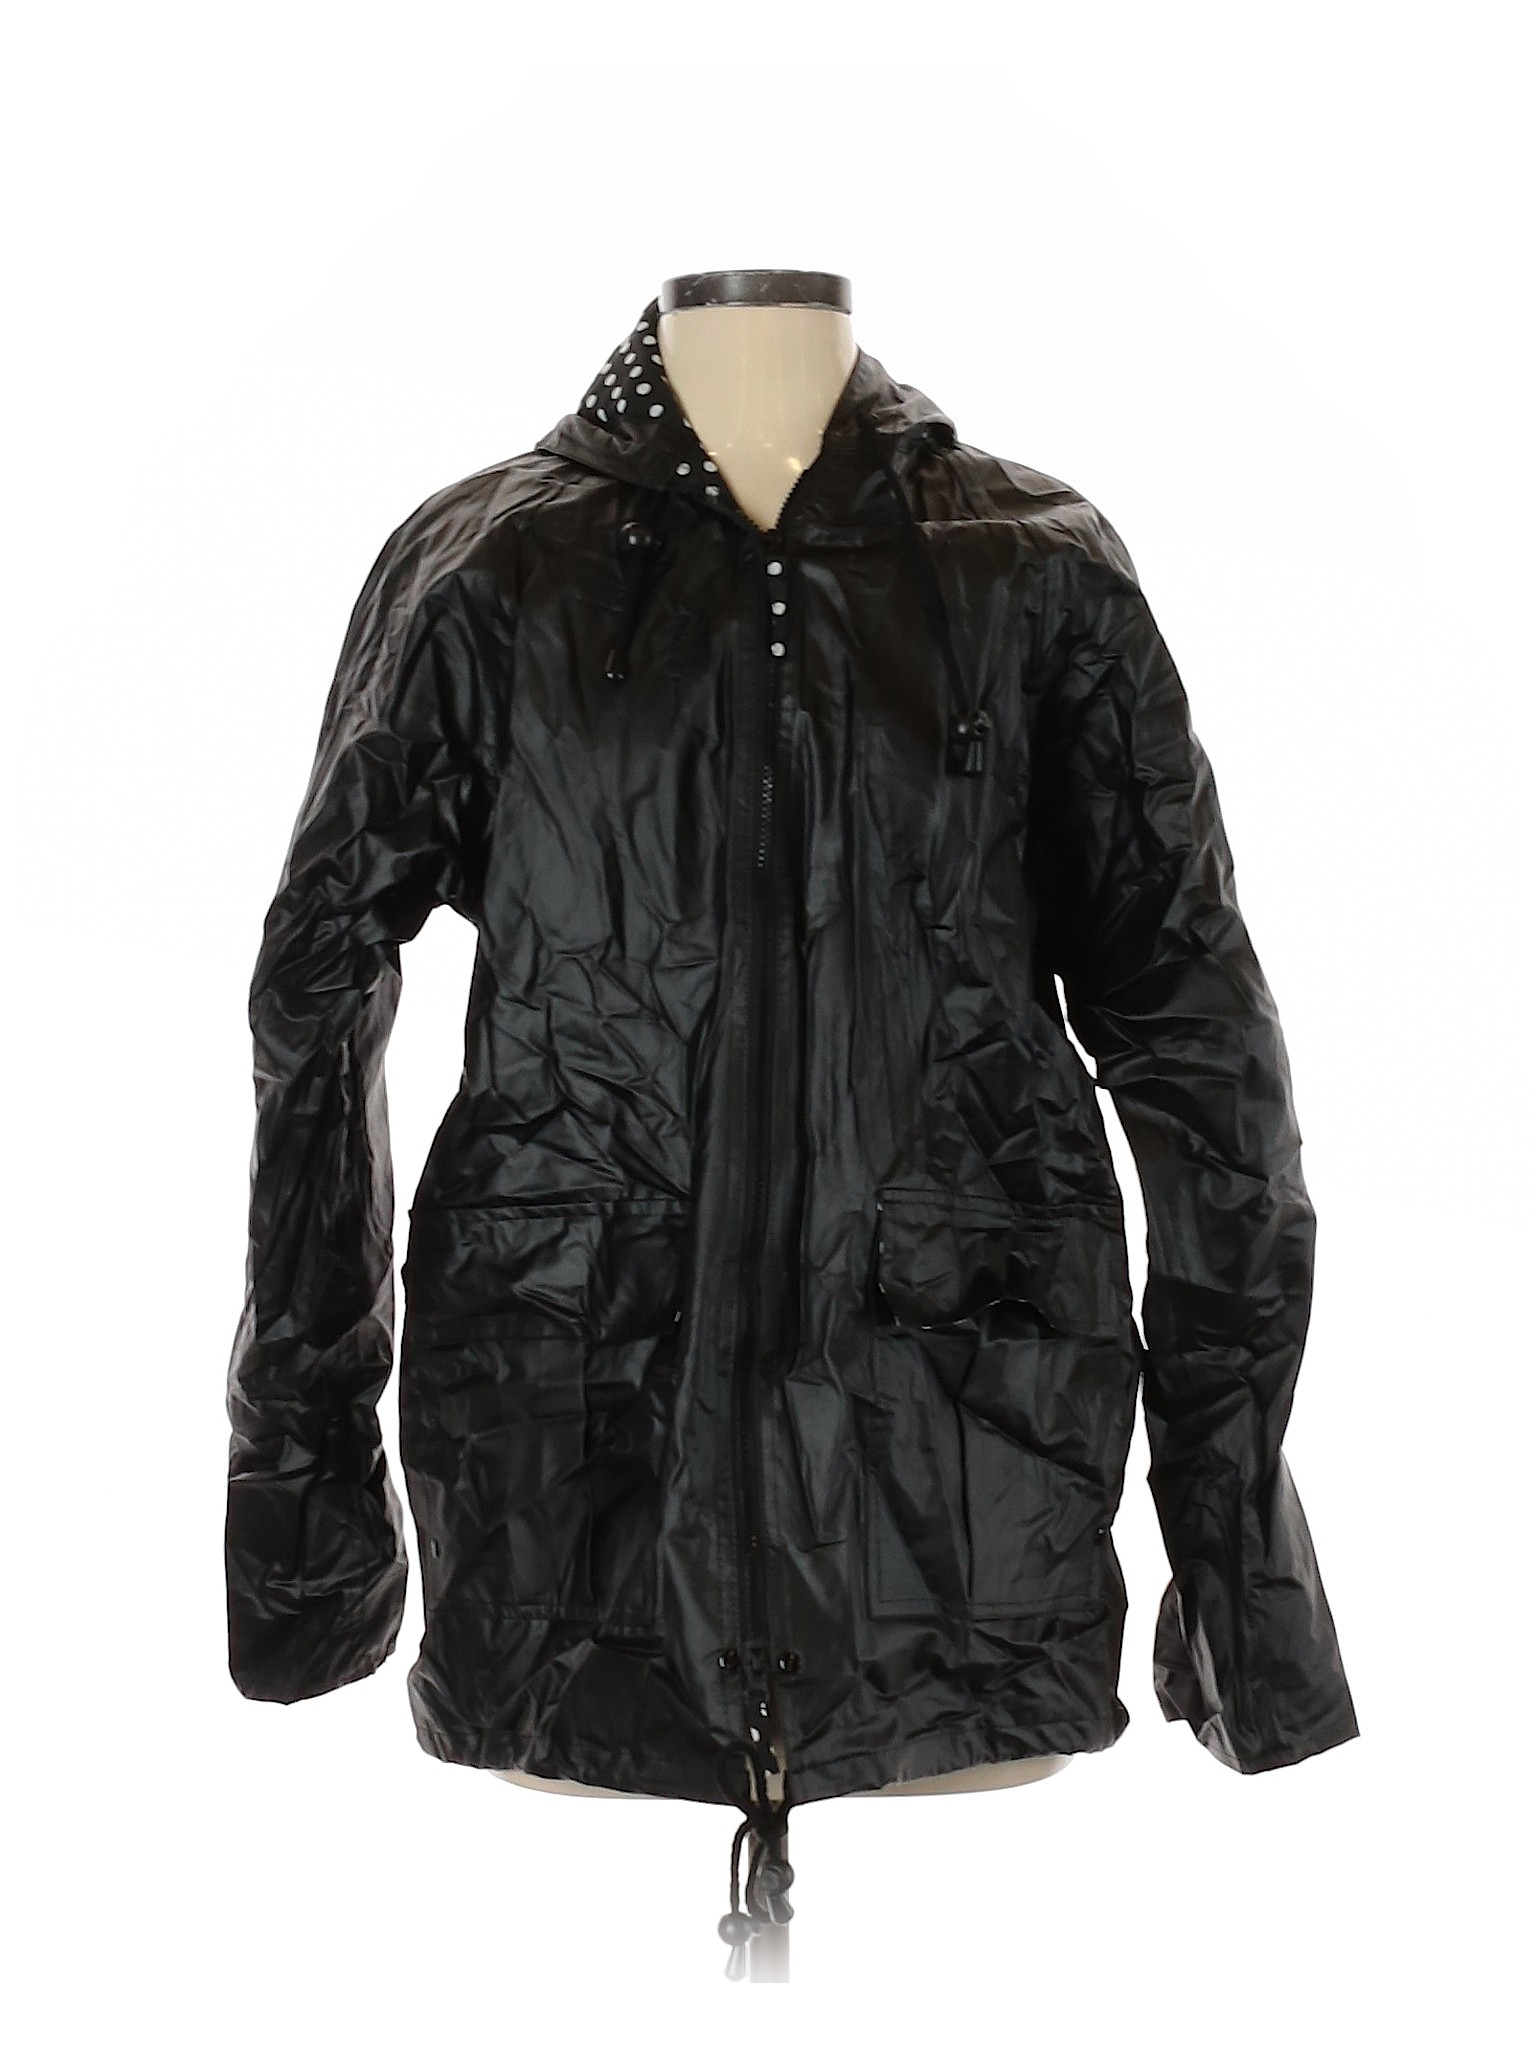 Thermal-Slicks 100% Polyvinyl Chloride Solid Black Raincoat Size S - 54 ...